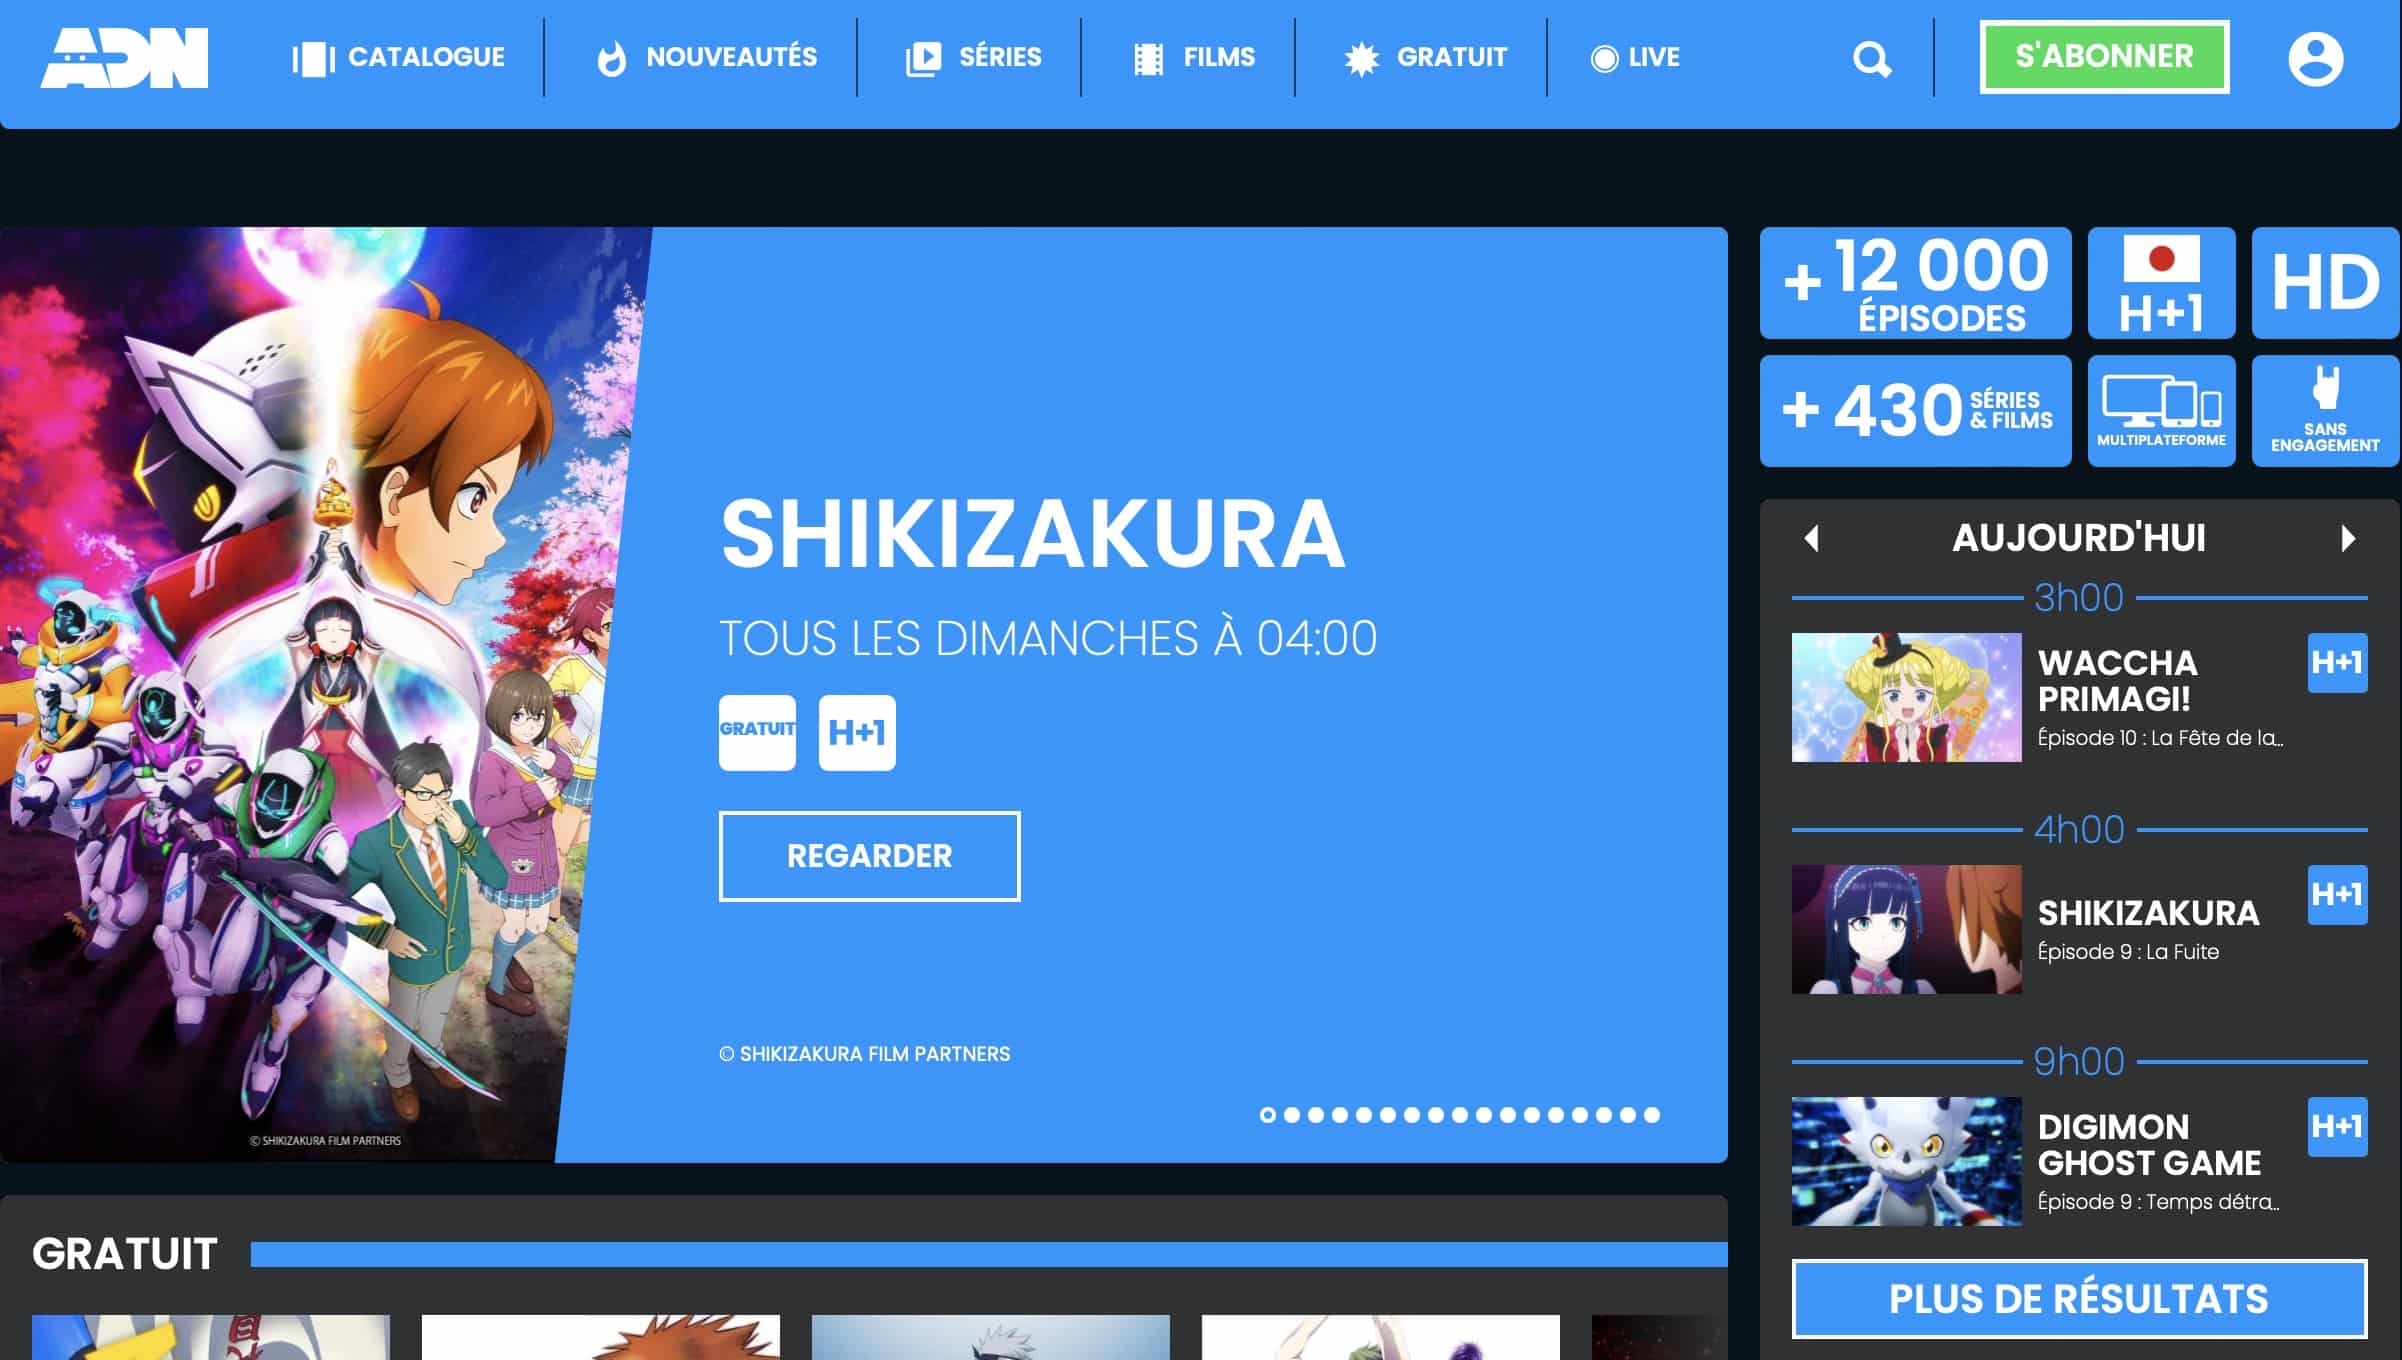 Anime Digital Network : L'offre de streaming legal d'Anime